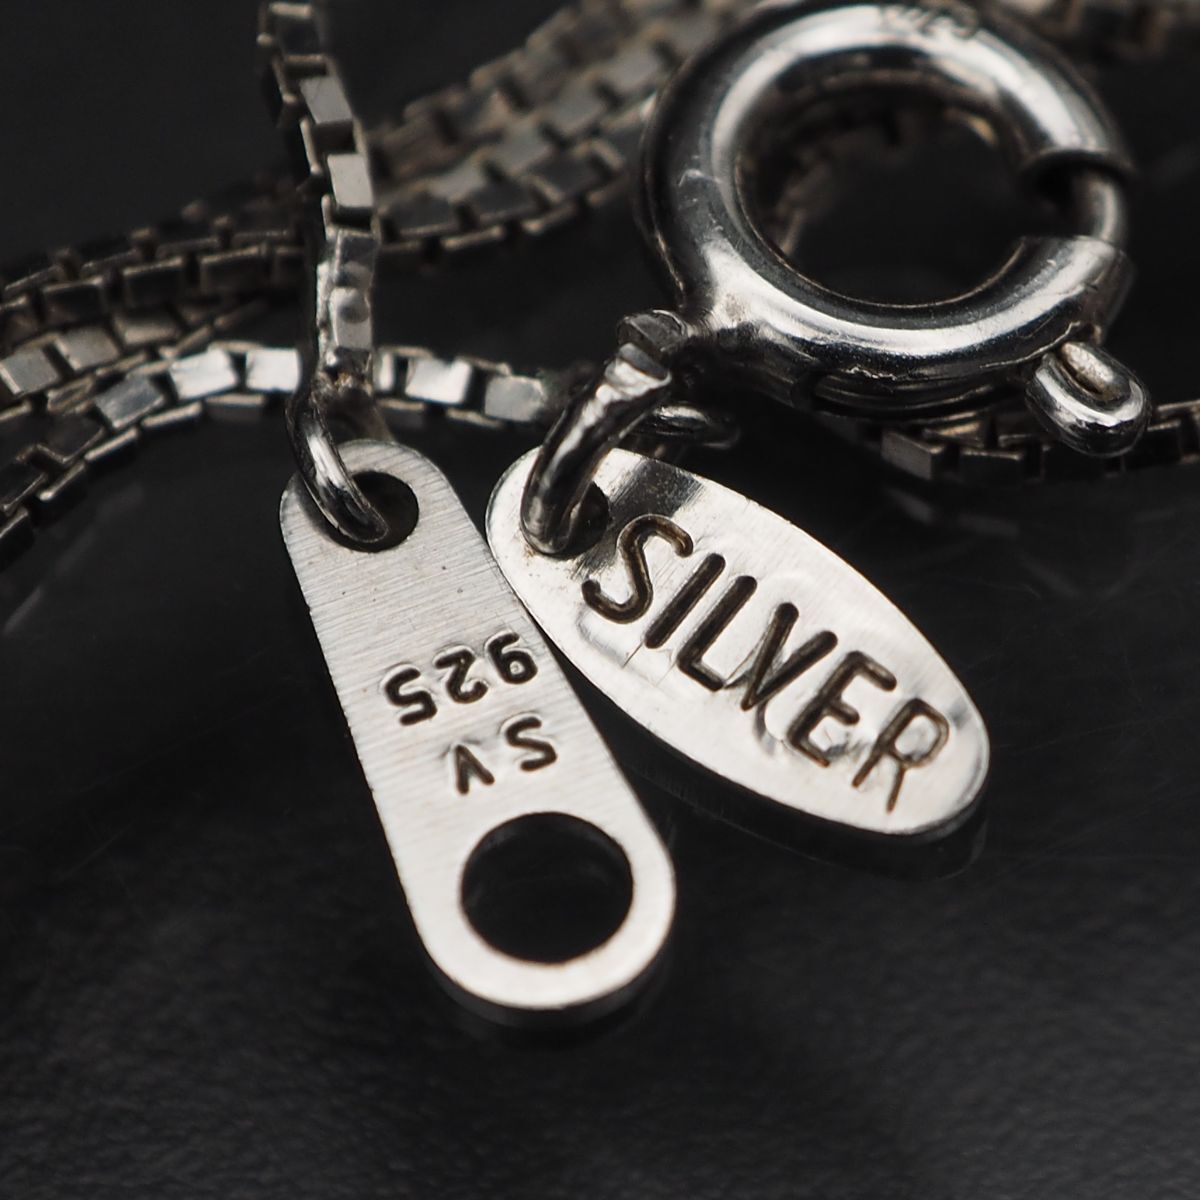 S766 ダイヤモンド風 me SILVER925刻印 ペンダント ネックレス デザイン シルバー - メルカリ